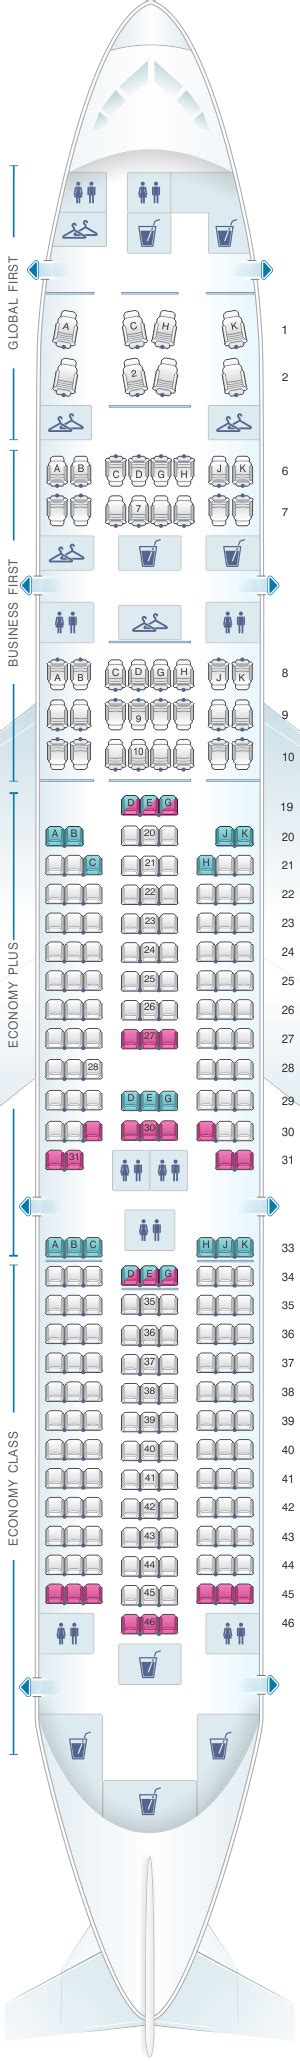 united seating chart 777